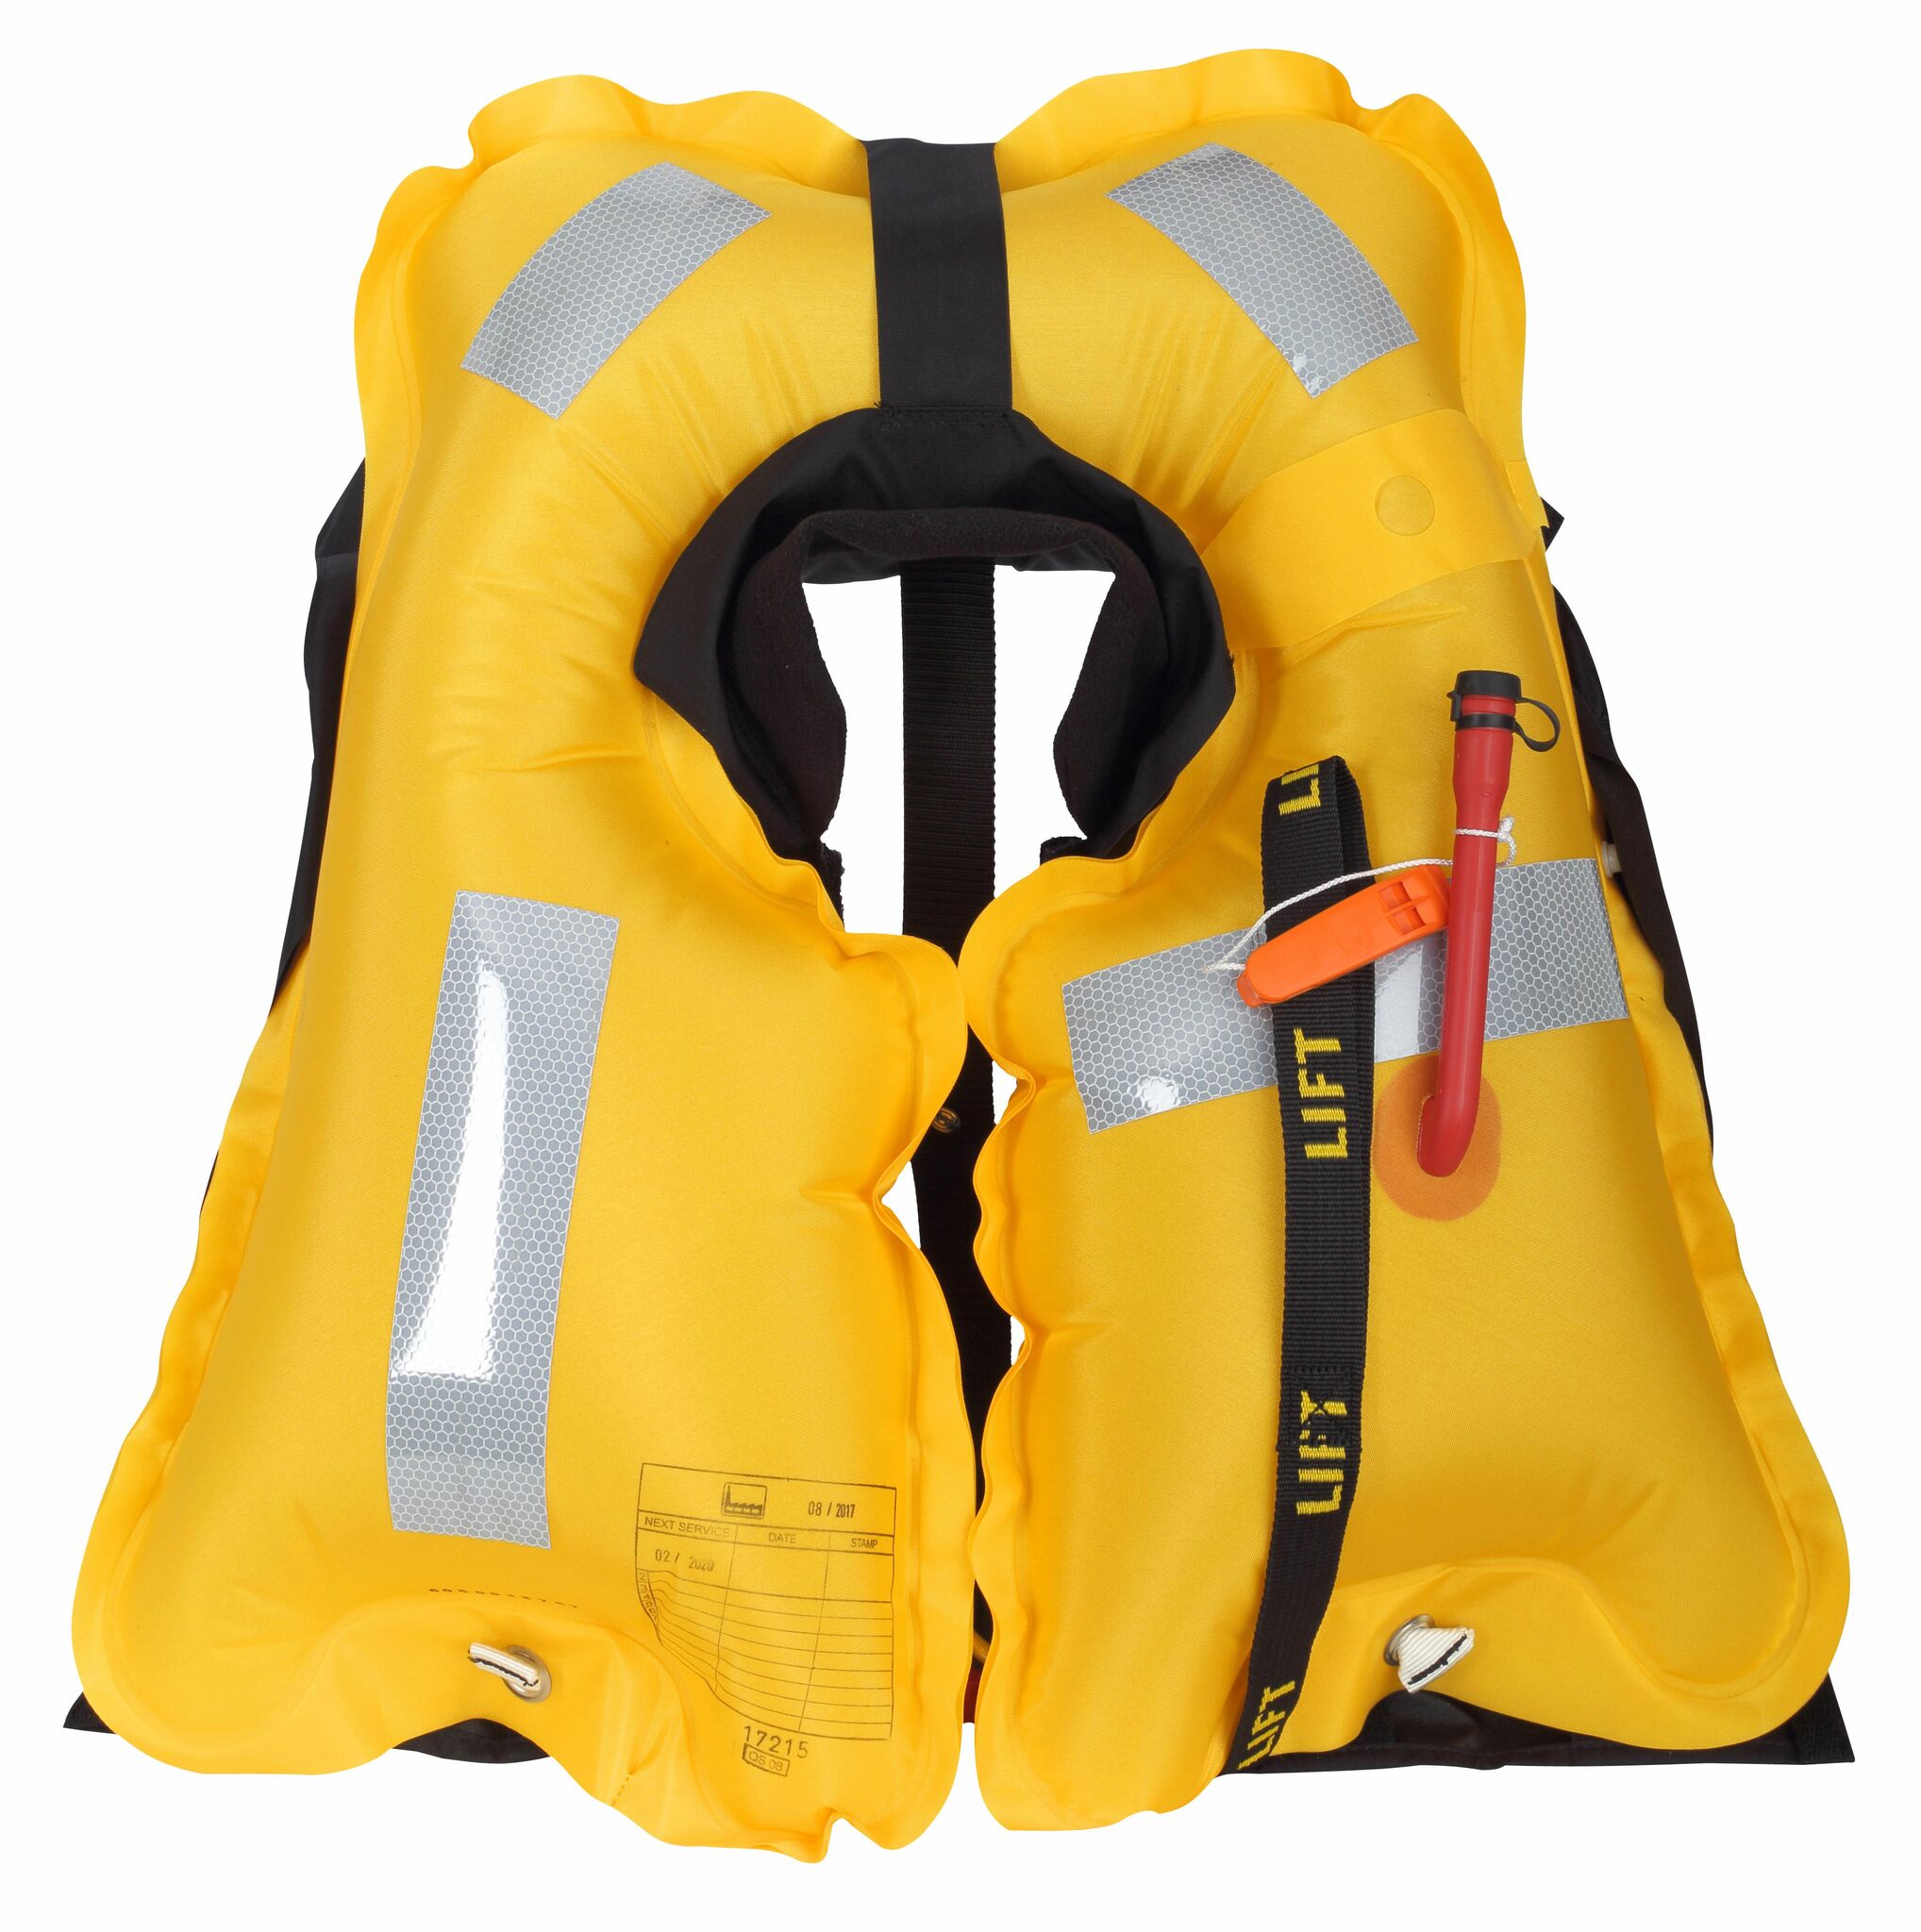 SECUMAR life jacket Ultra 170 with harness